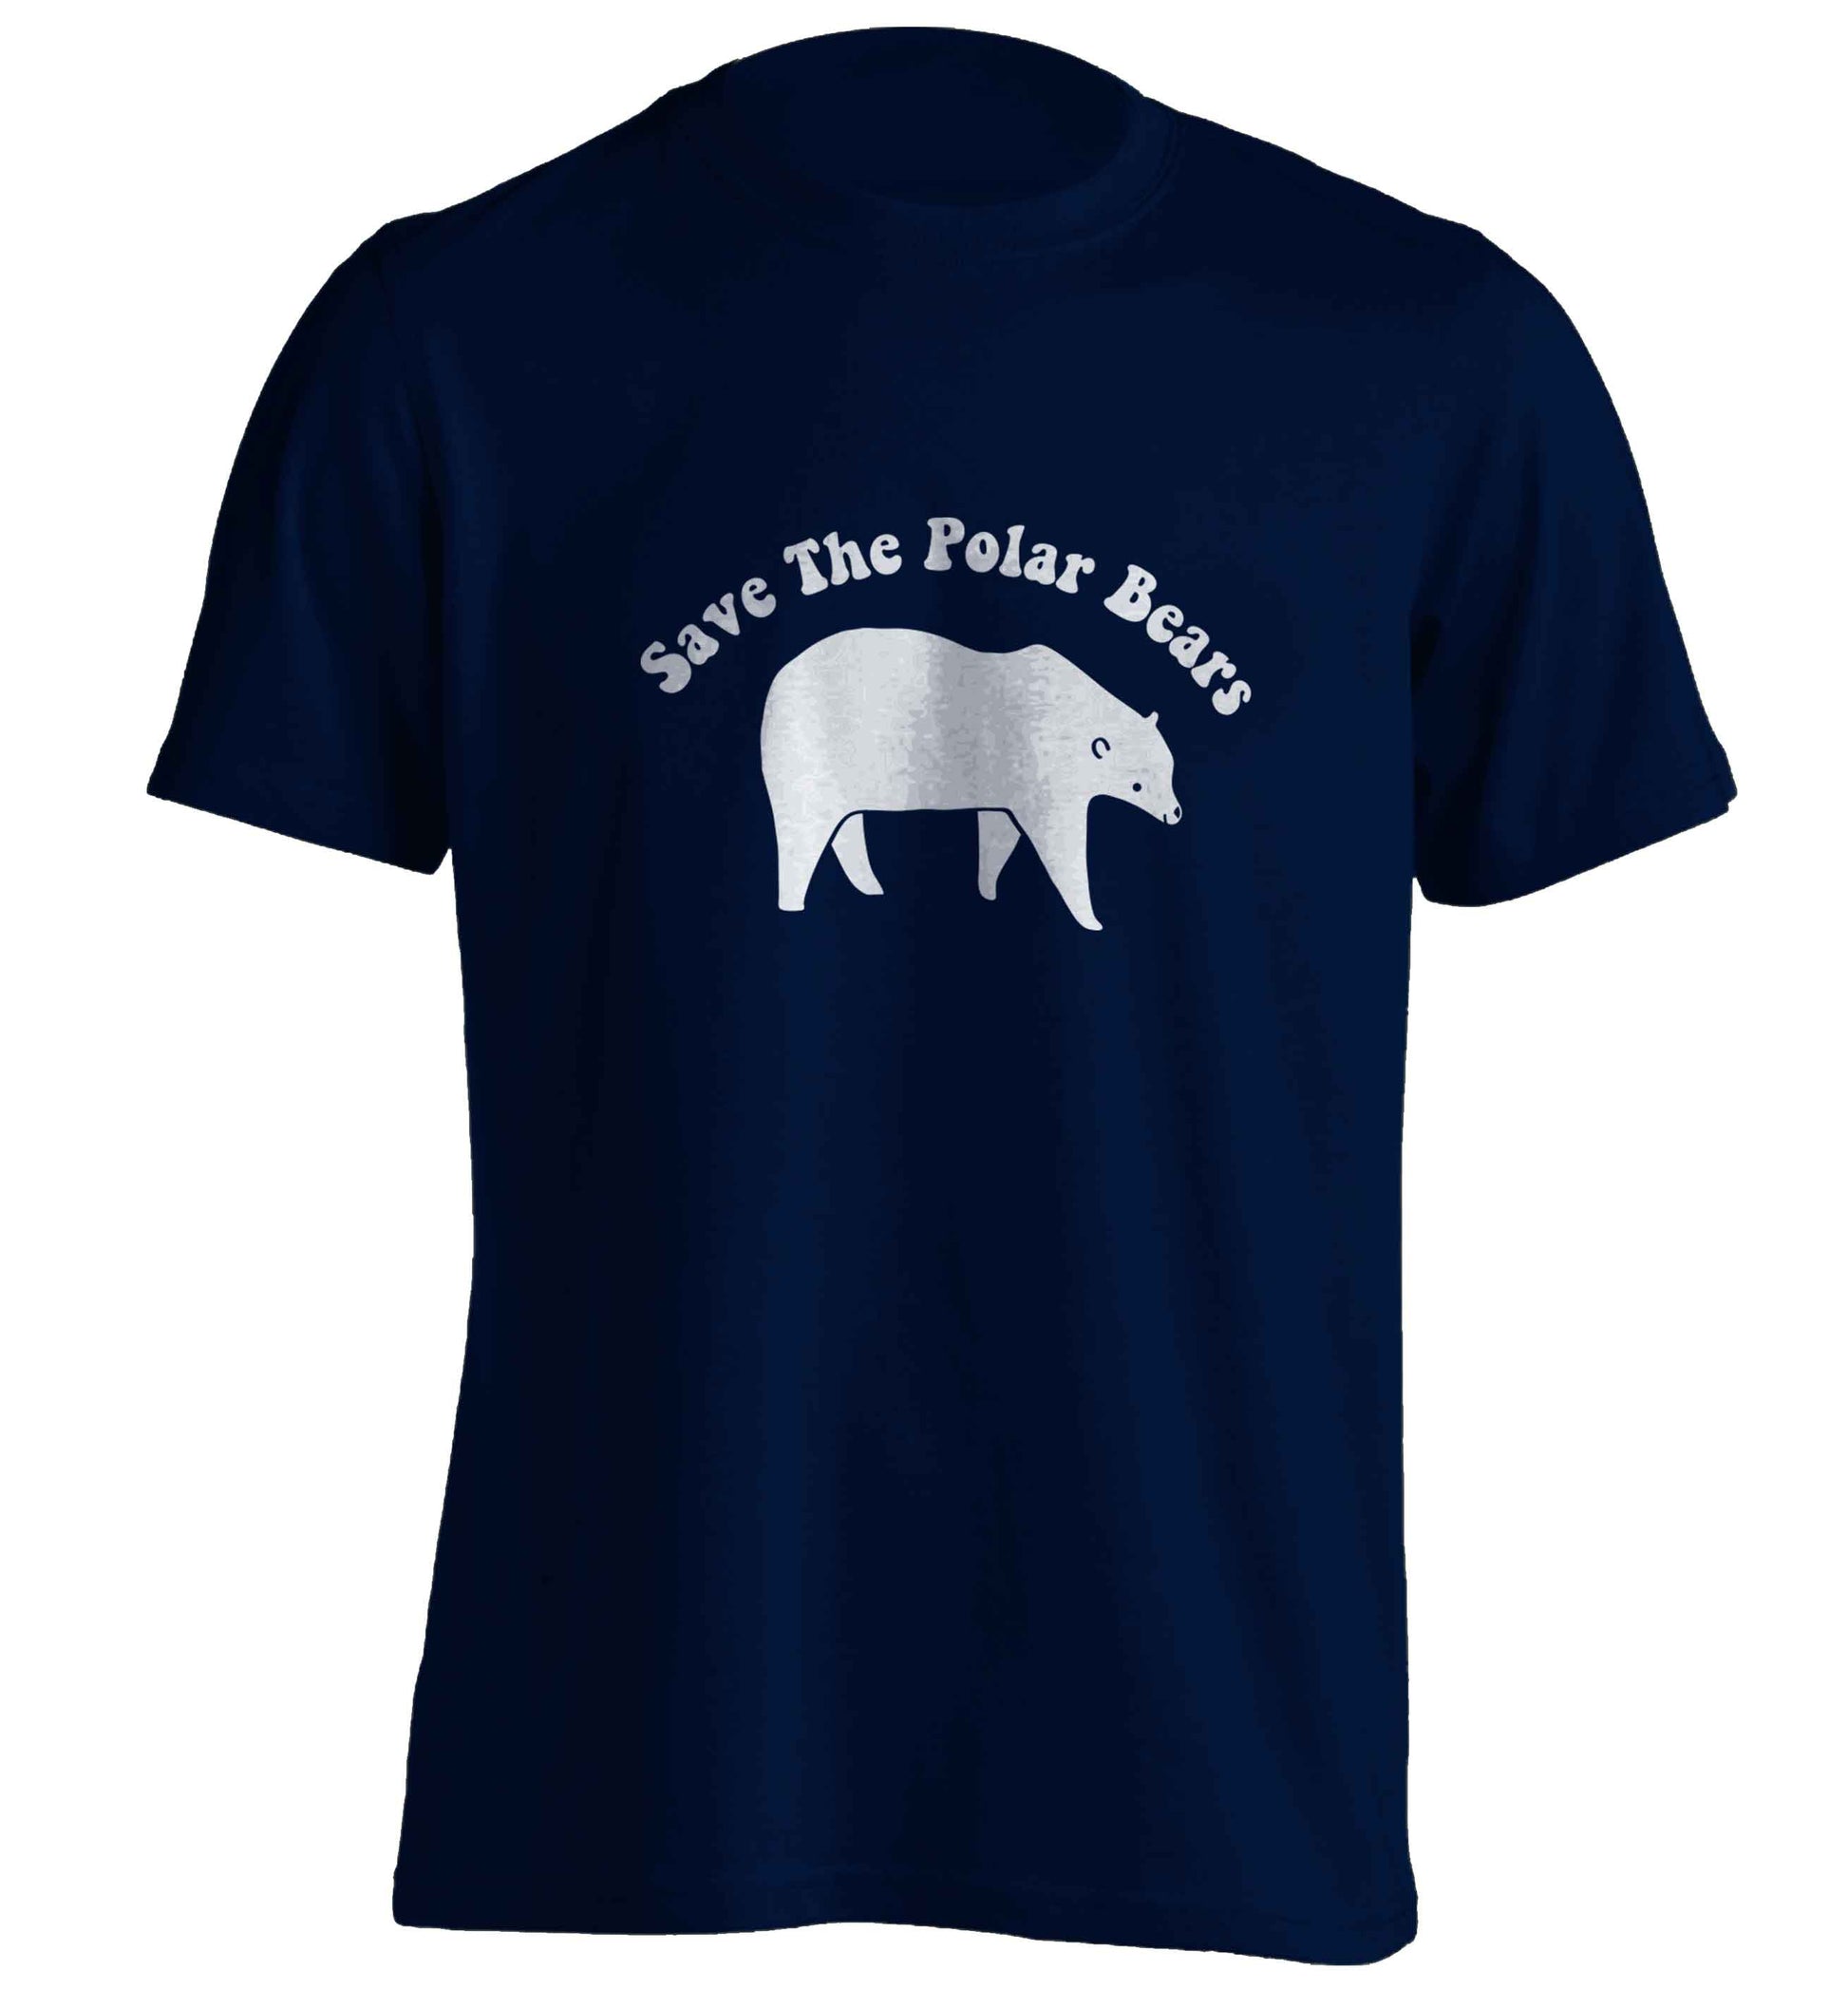 Save The Polar Bears adults unisex navy Tshirt 2XL